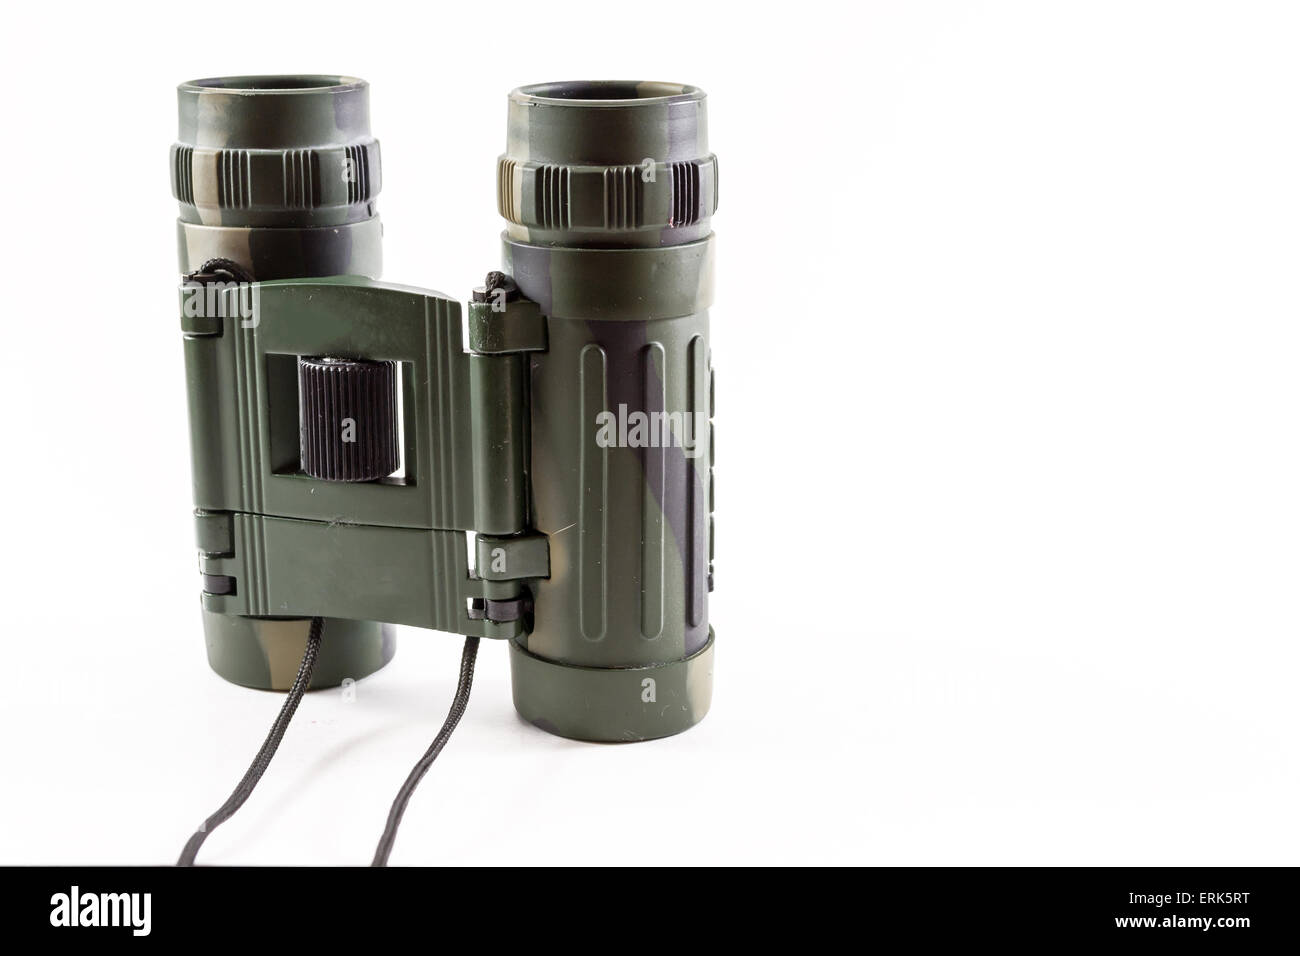 Popular camo style binoculars common with many hunters and fishermen in Ufa Russia Stock Photo